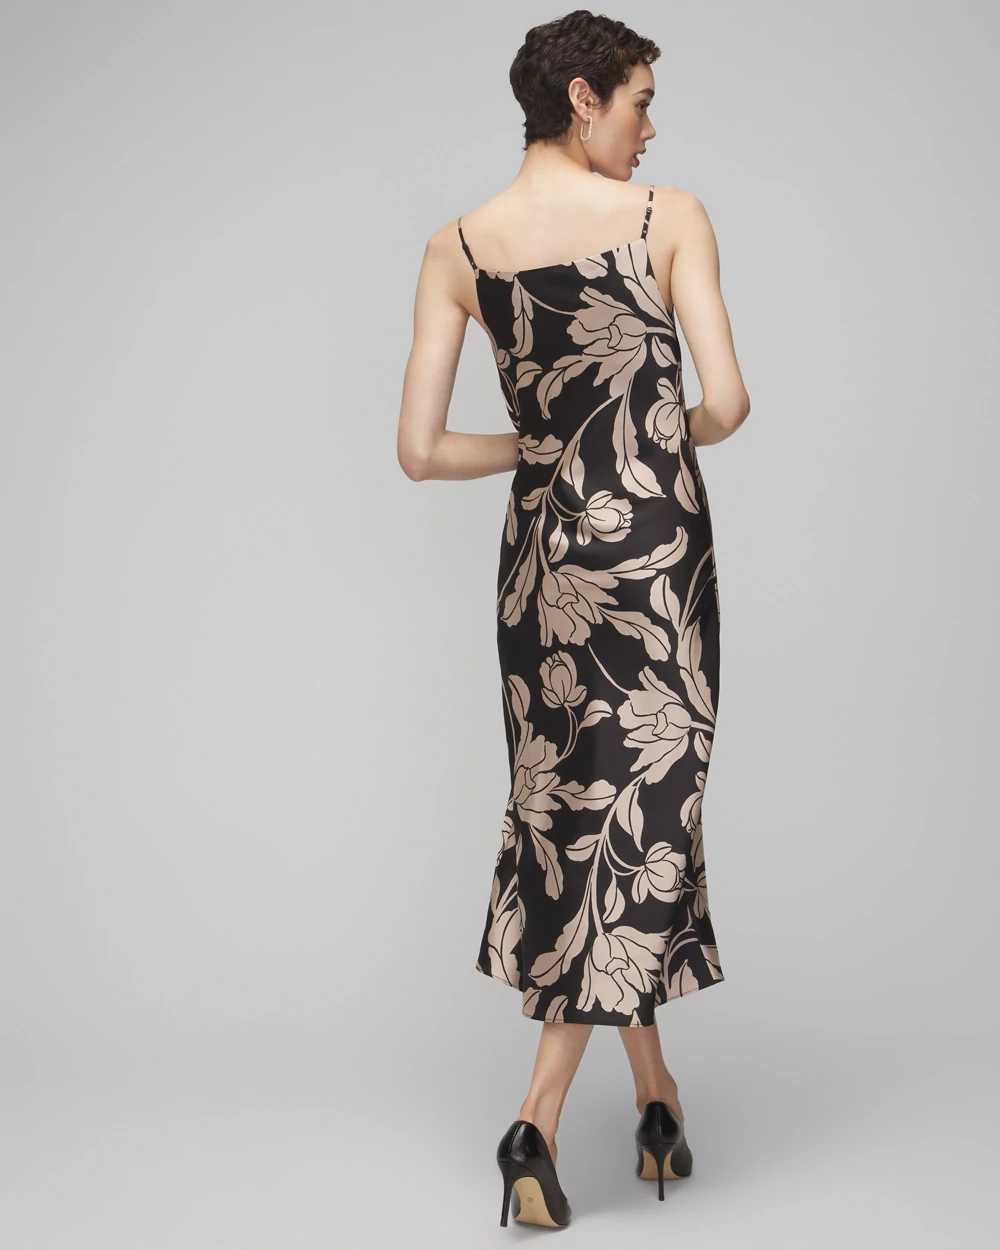 Sleeveless Cowl Neck Slip Midi Dress click to view larger image.